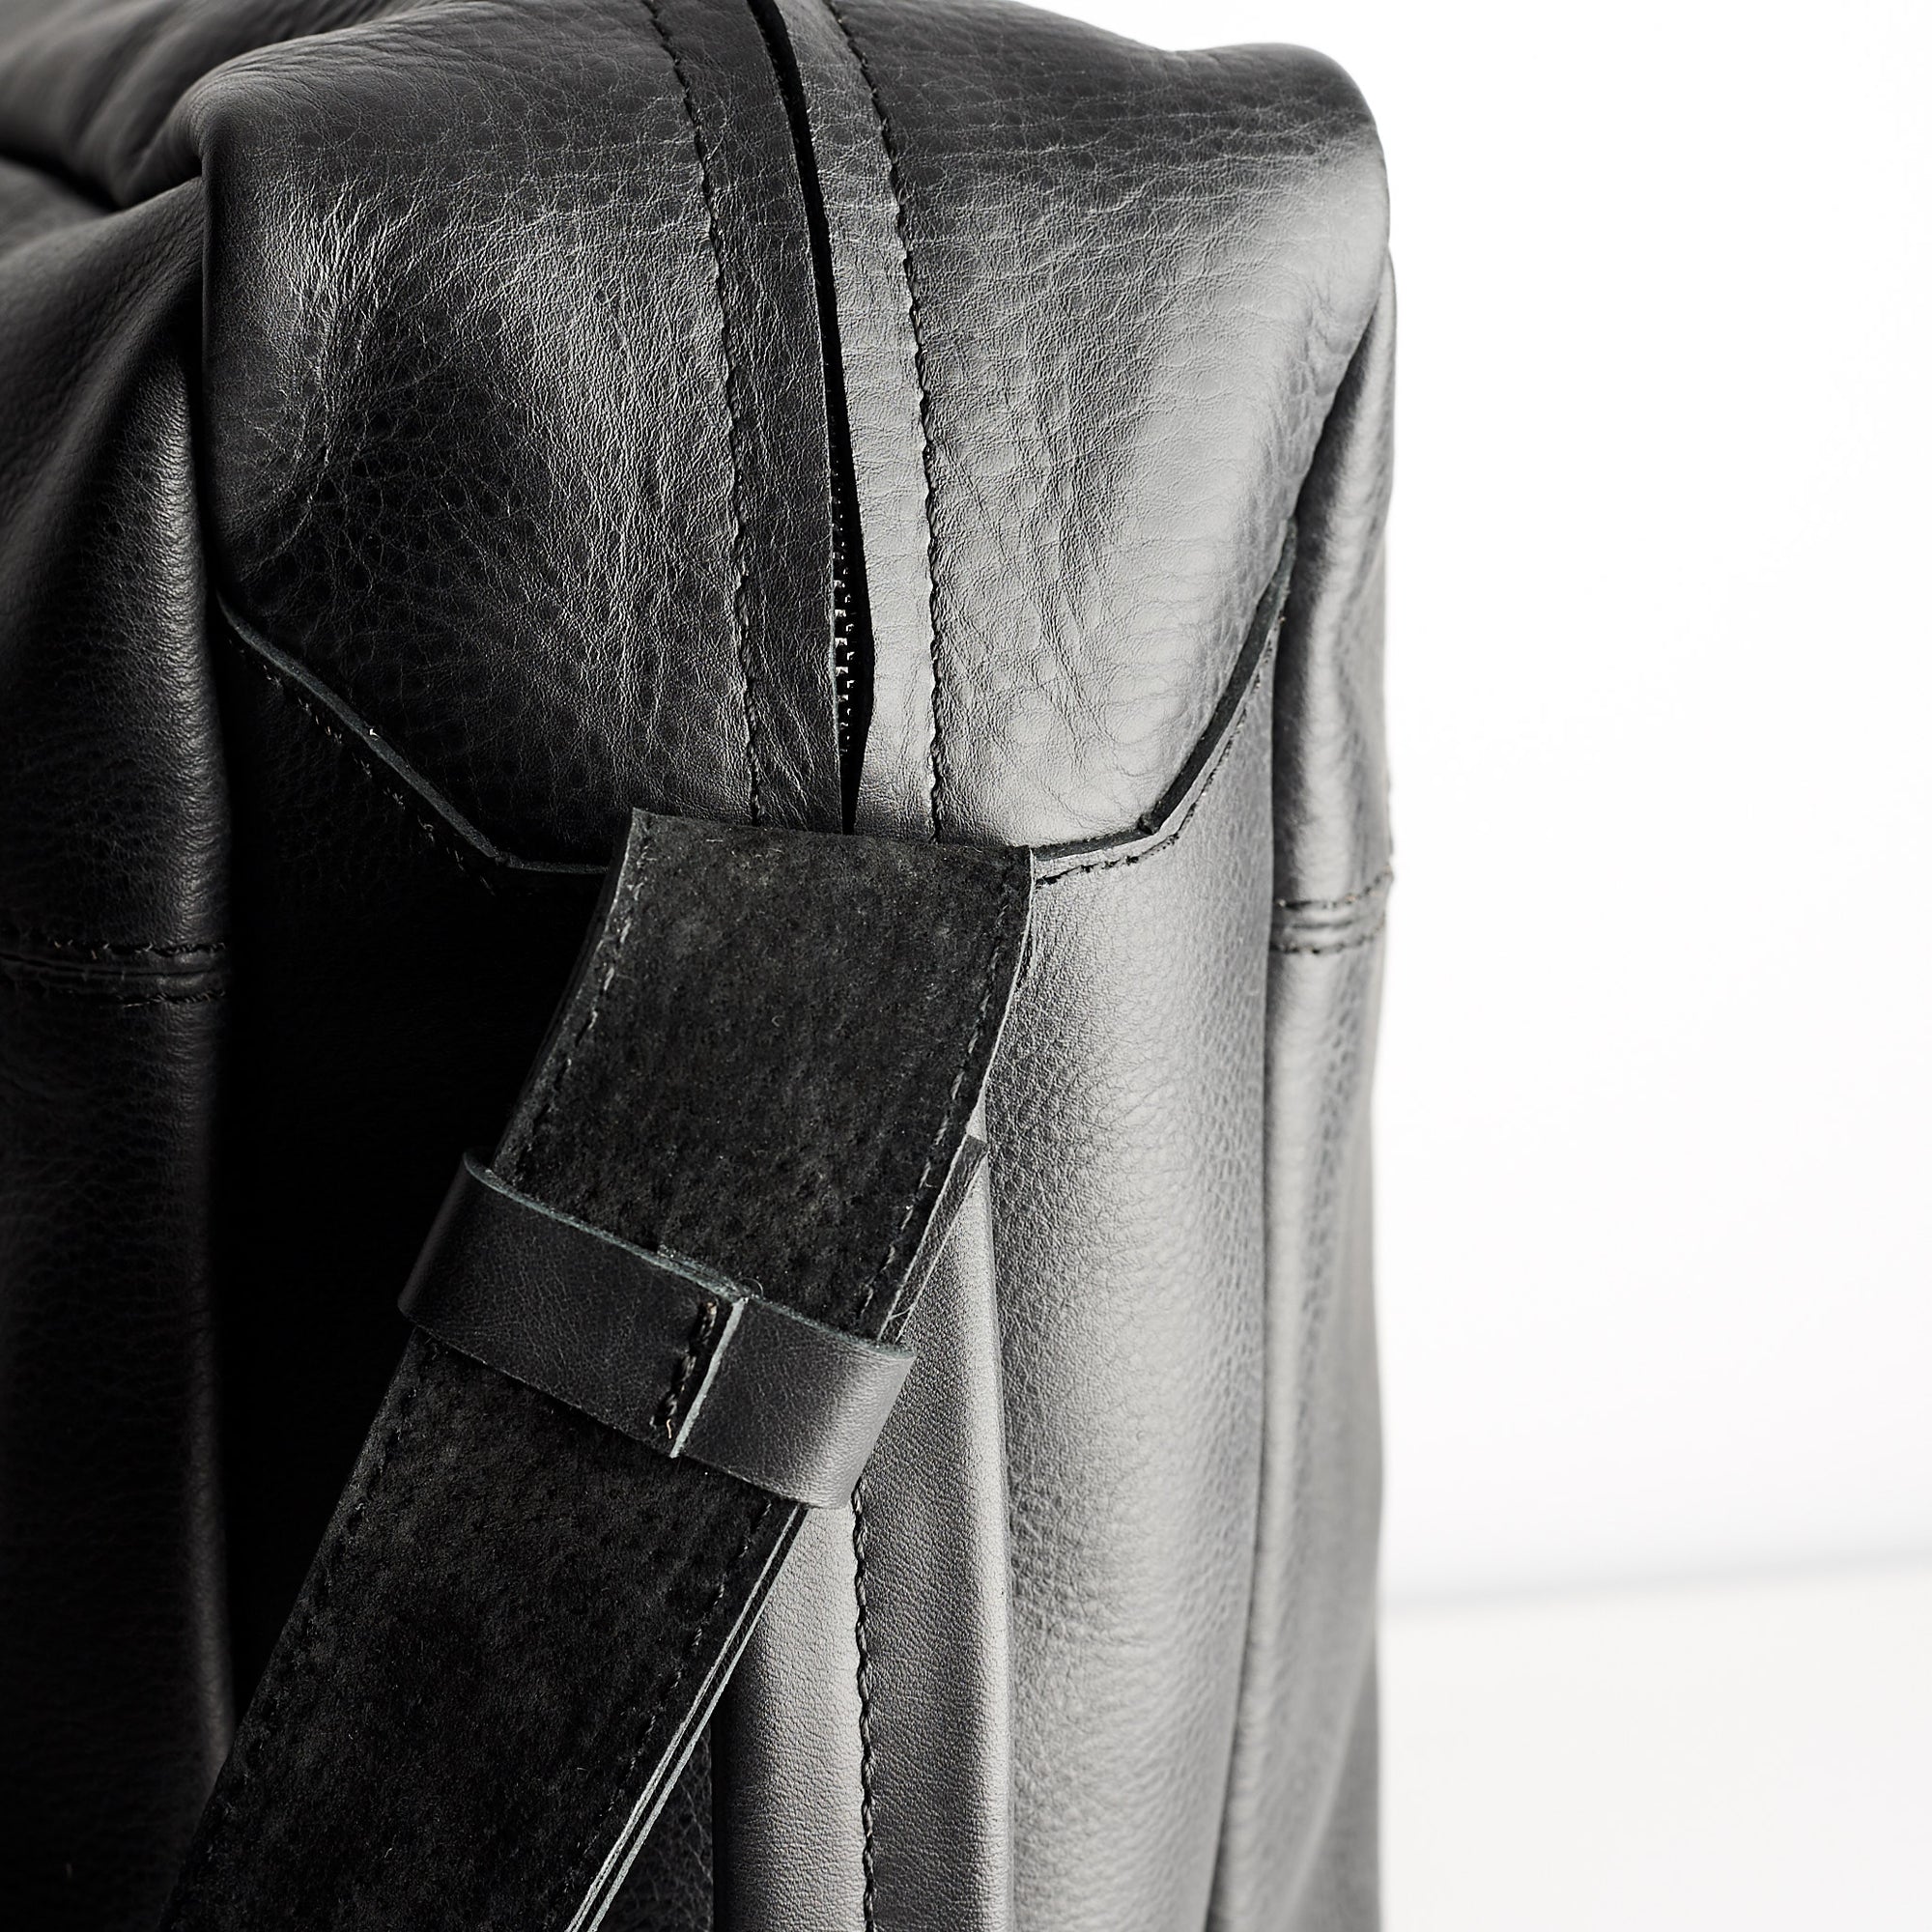 Suede texture. Back handmade leather messenger bag for men. Commuter bag, laptop leather bag by Capra Leather.